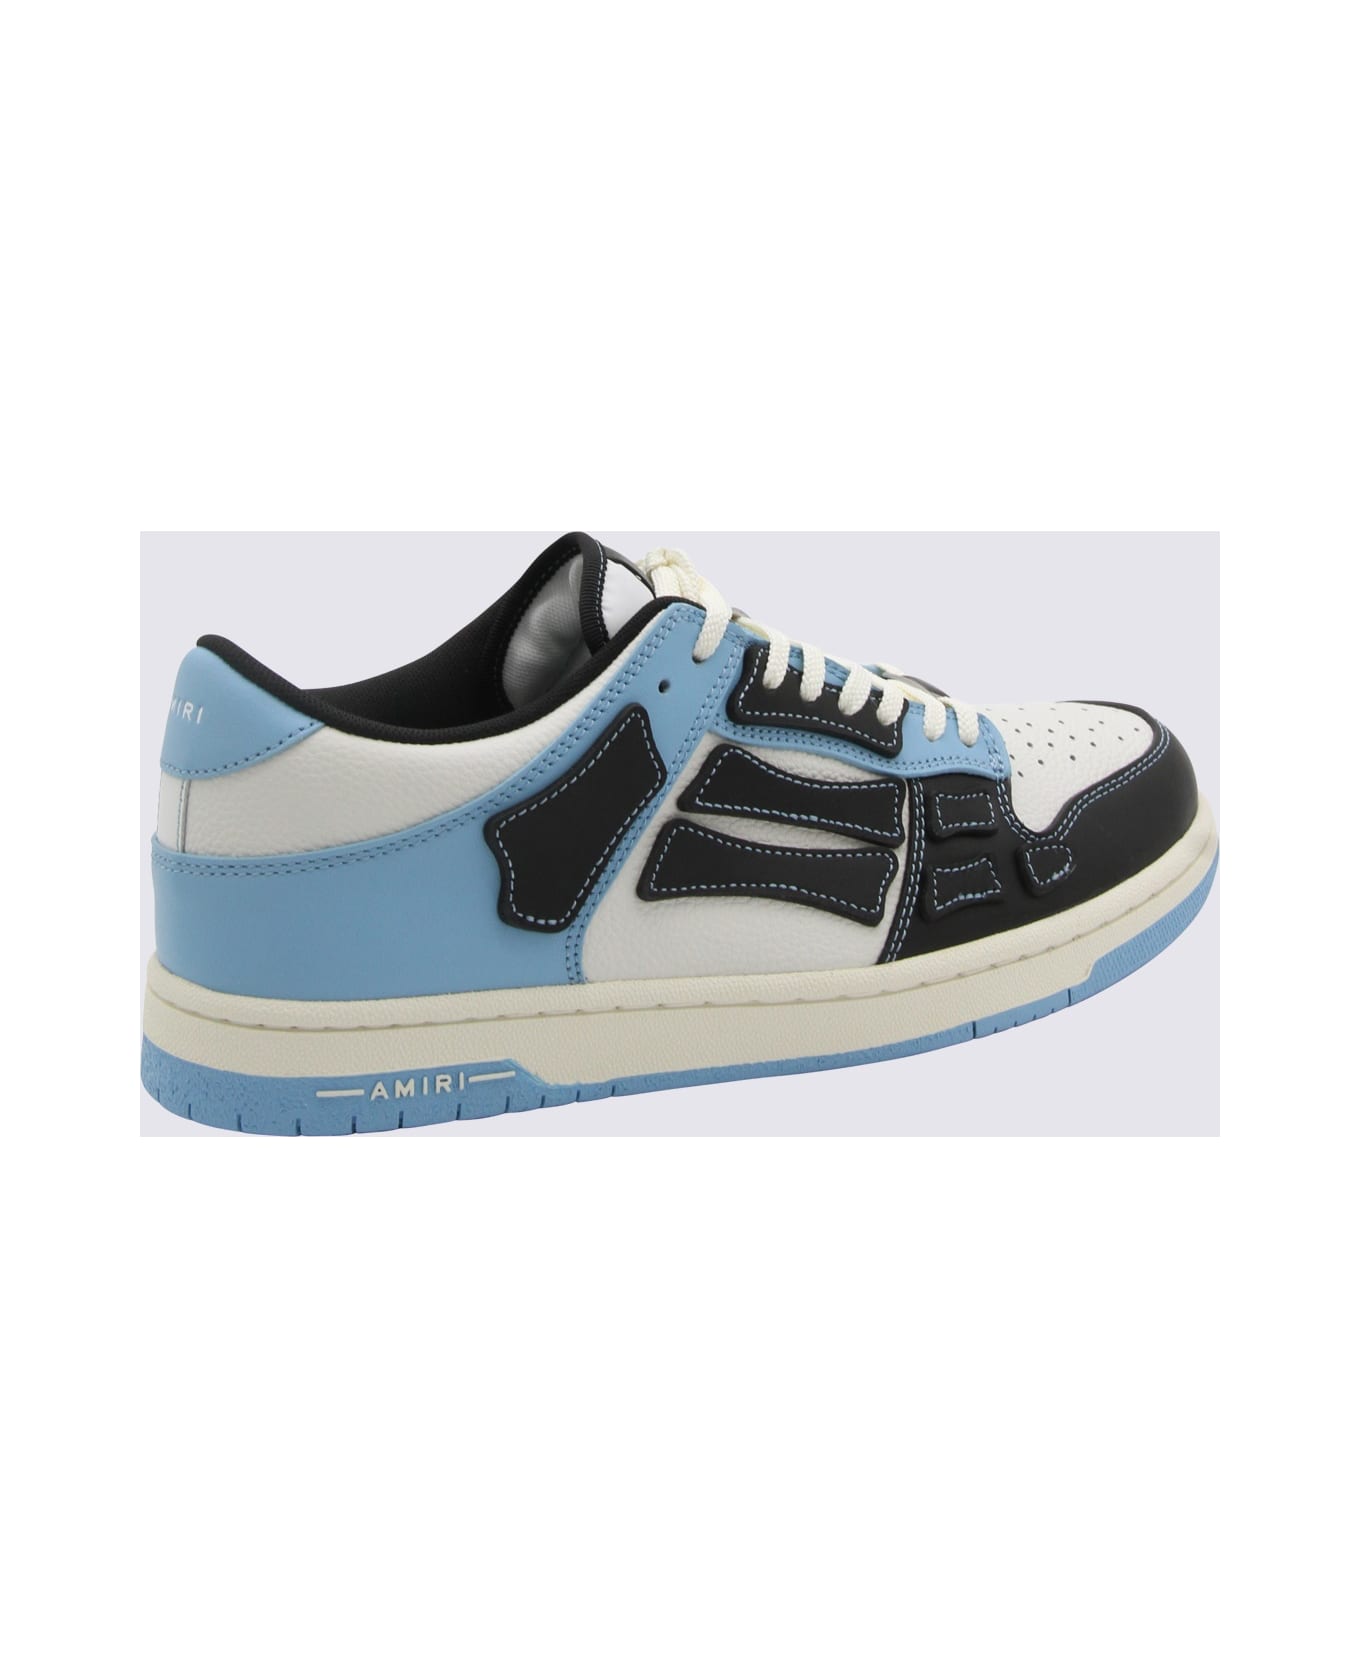 AMIRI Blue Leather Sneakers - Air Blue